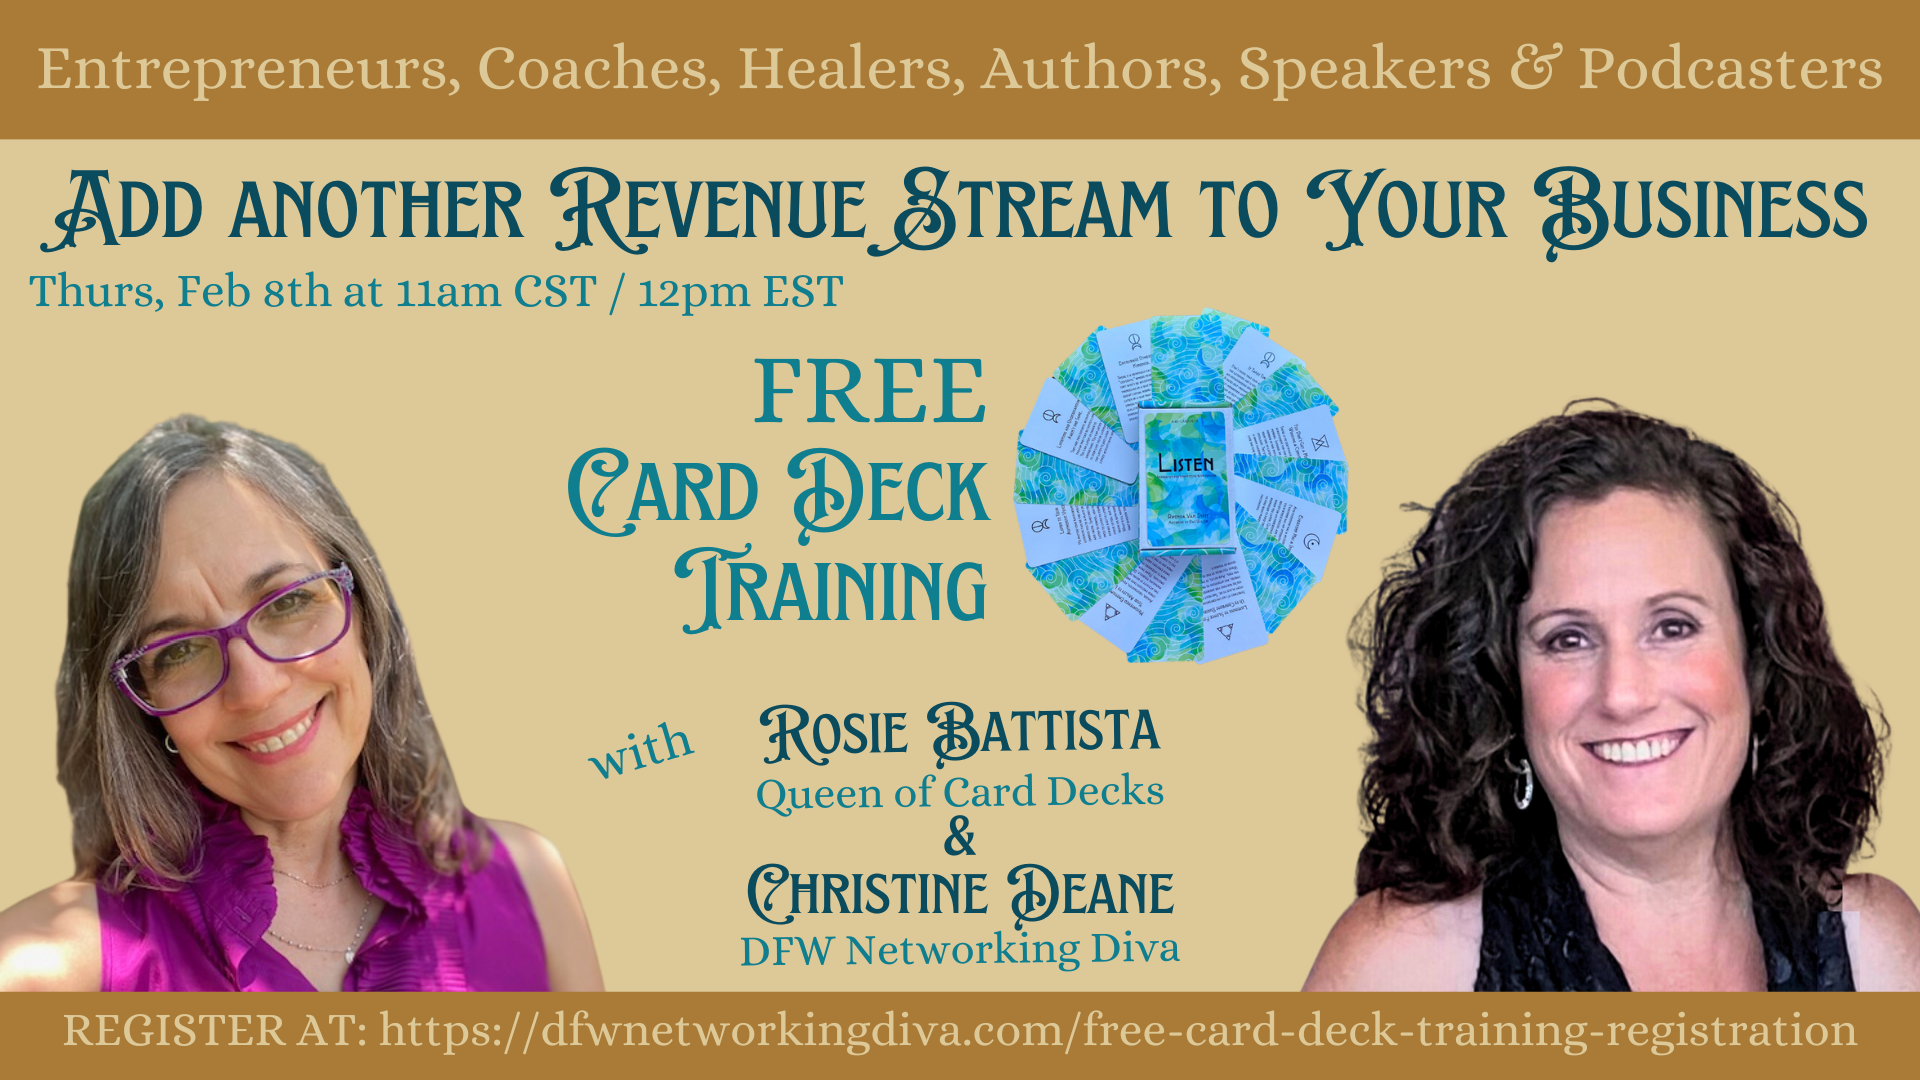 Free Card Deck Training with Rosie Battista and Christine Deane